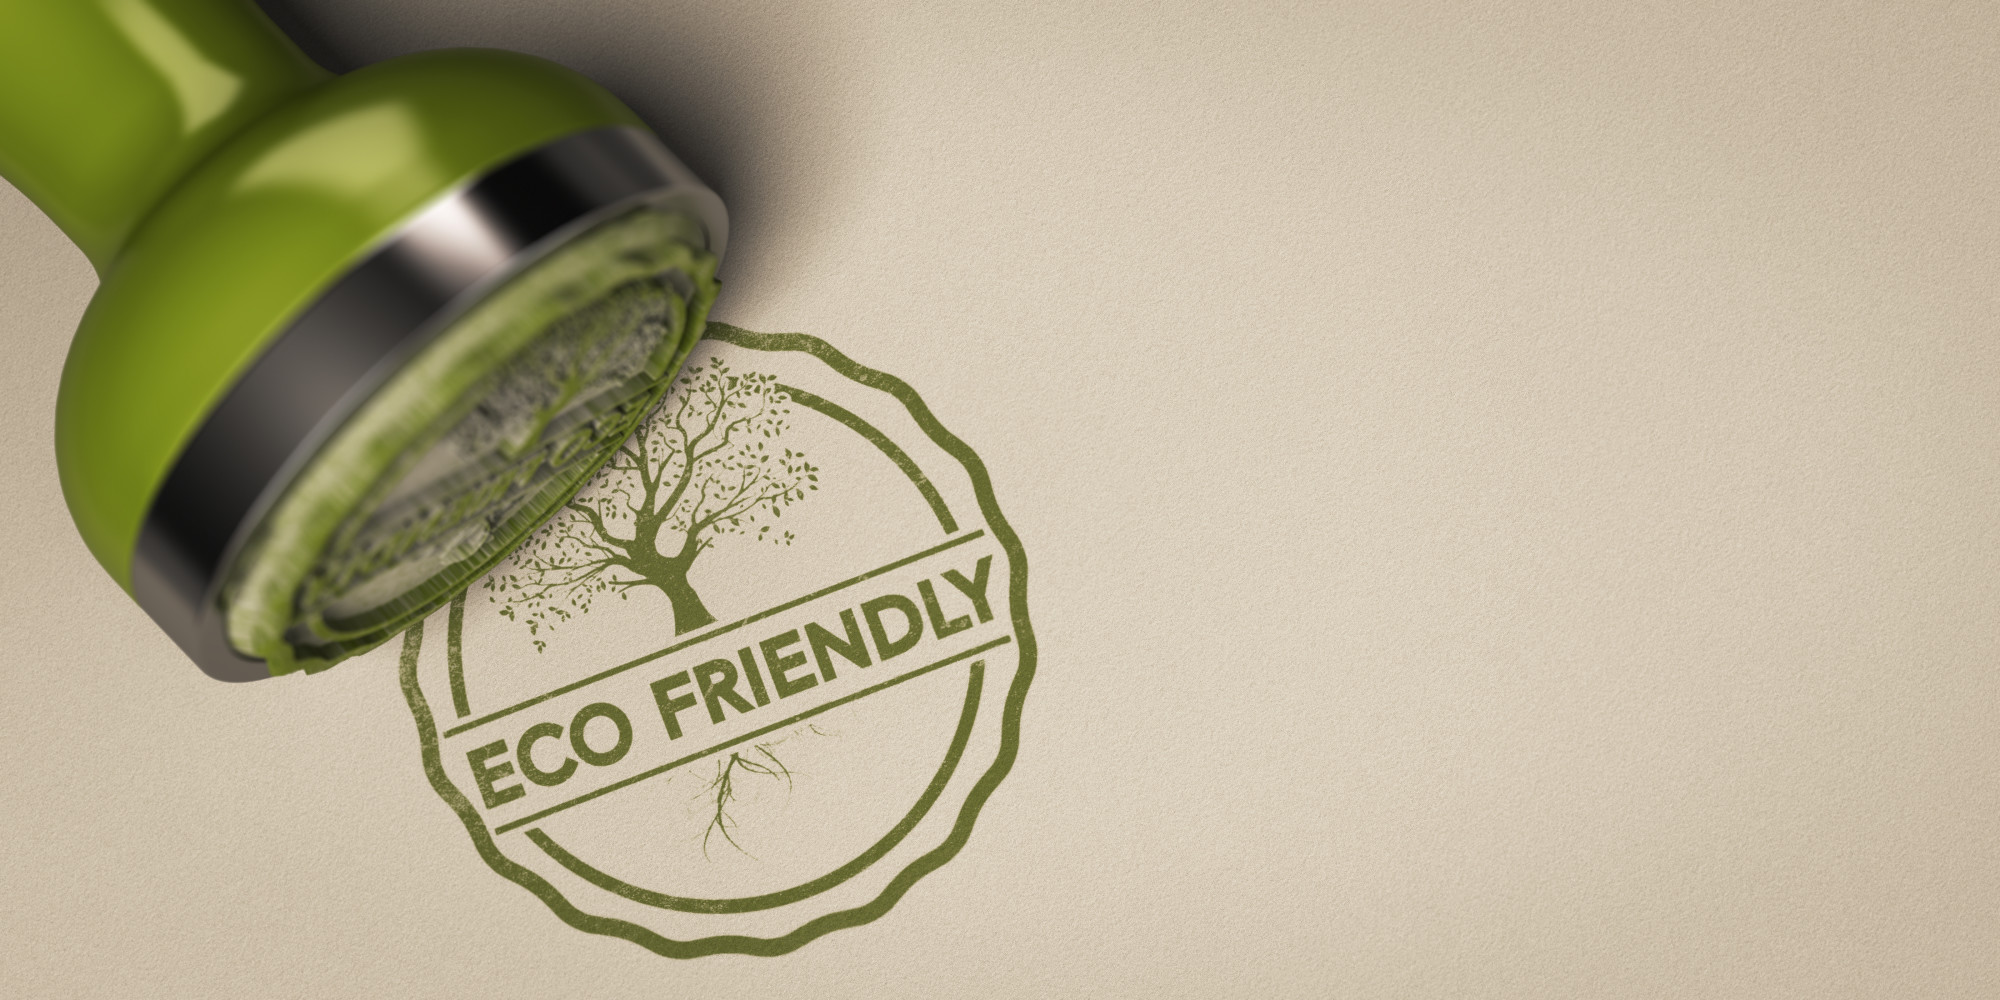 Eco Friendly stamp